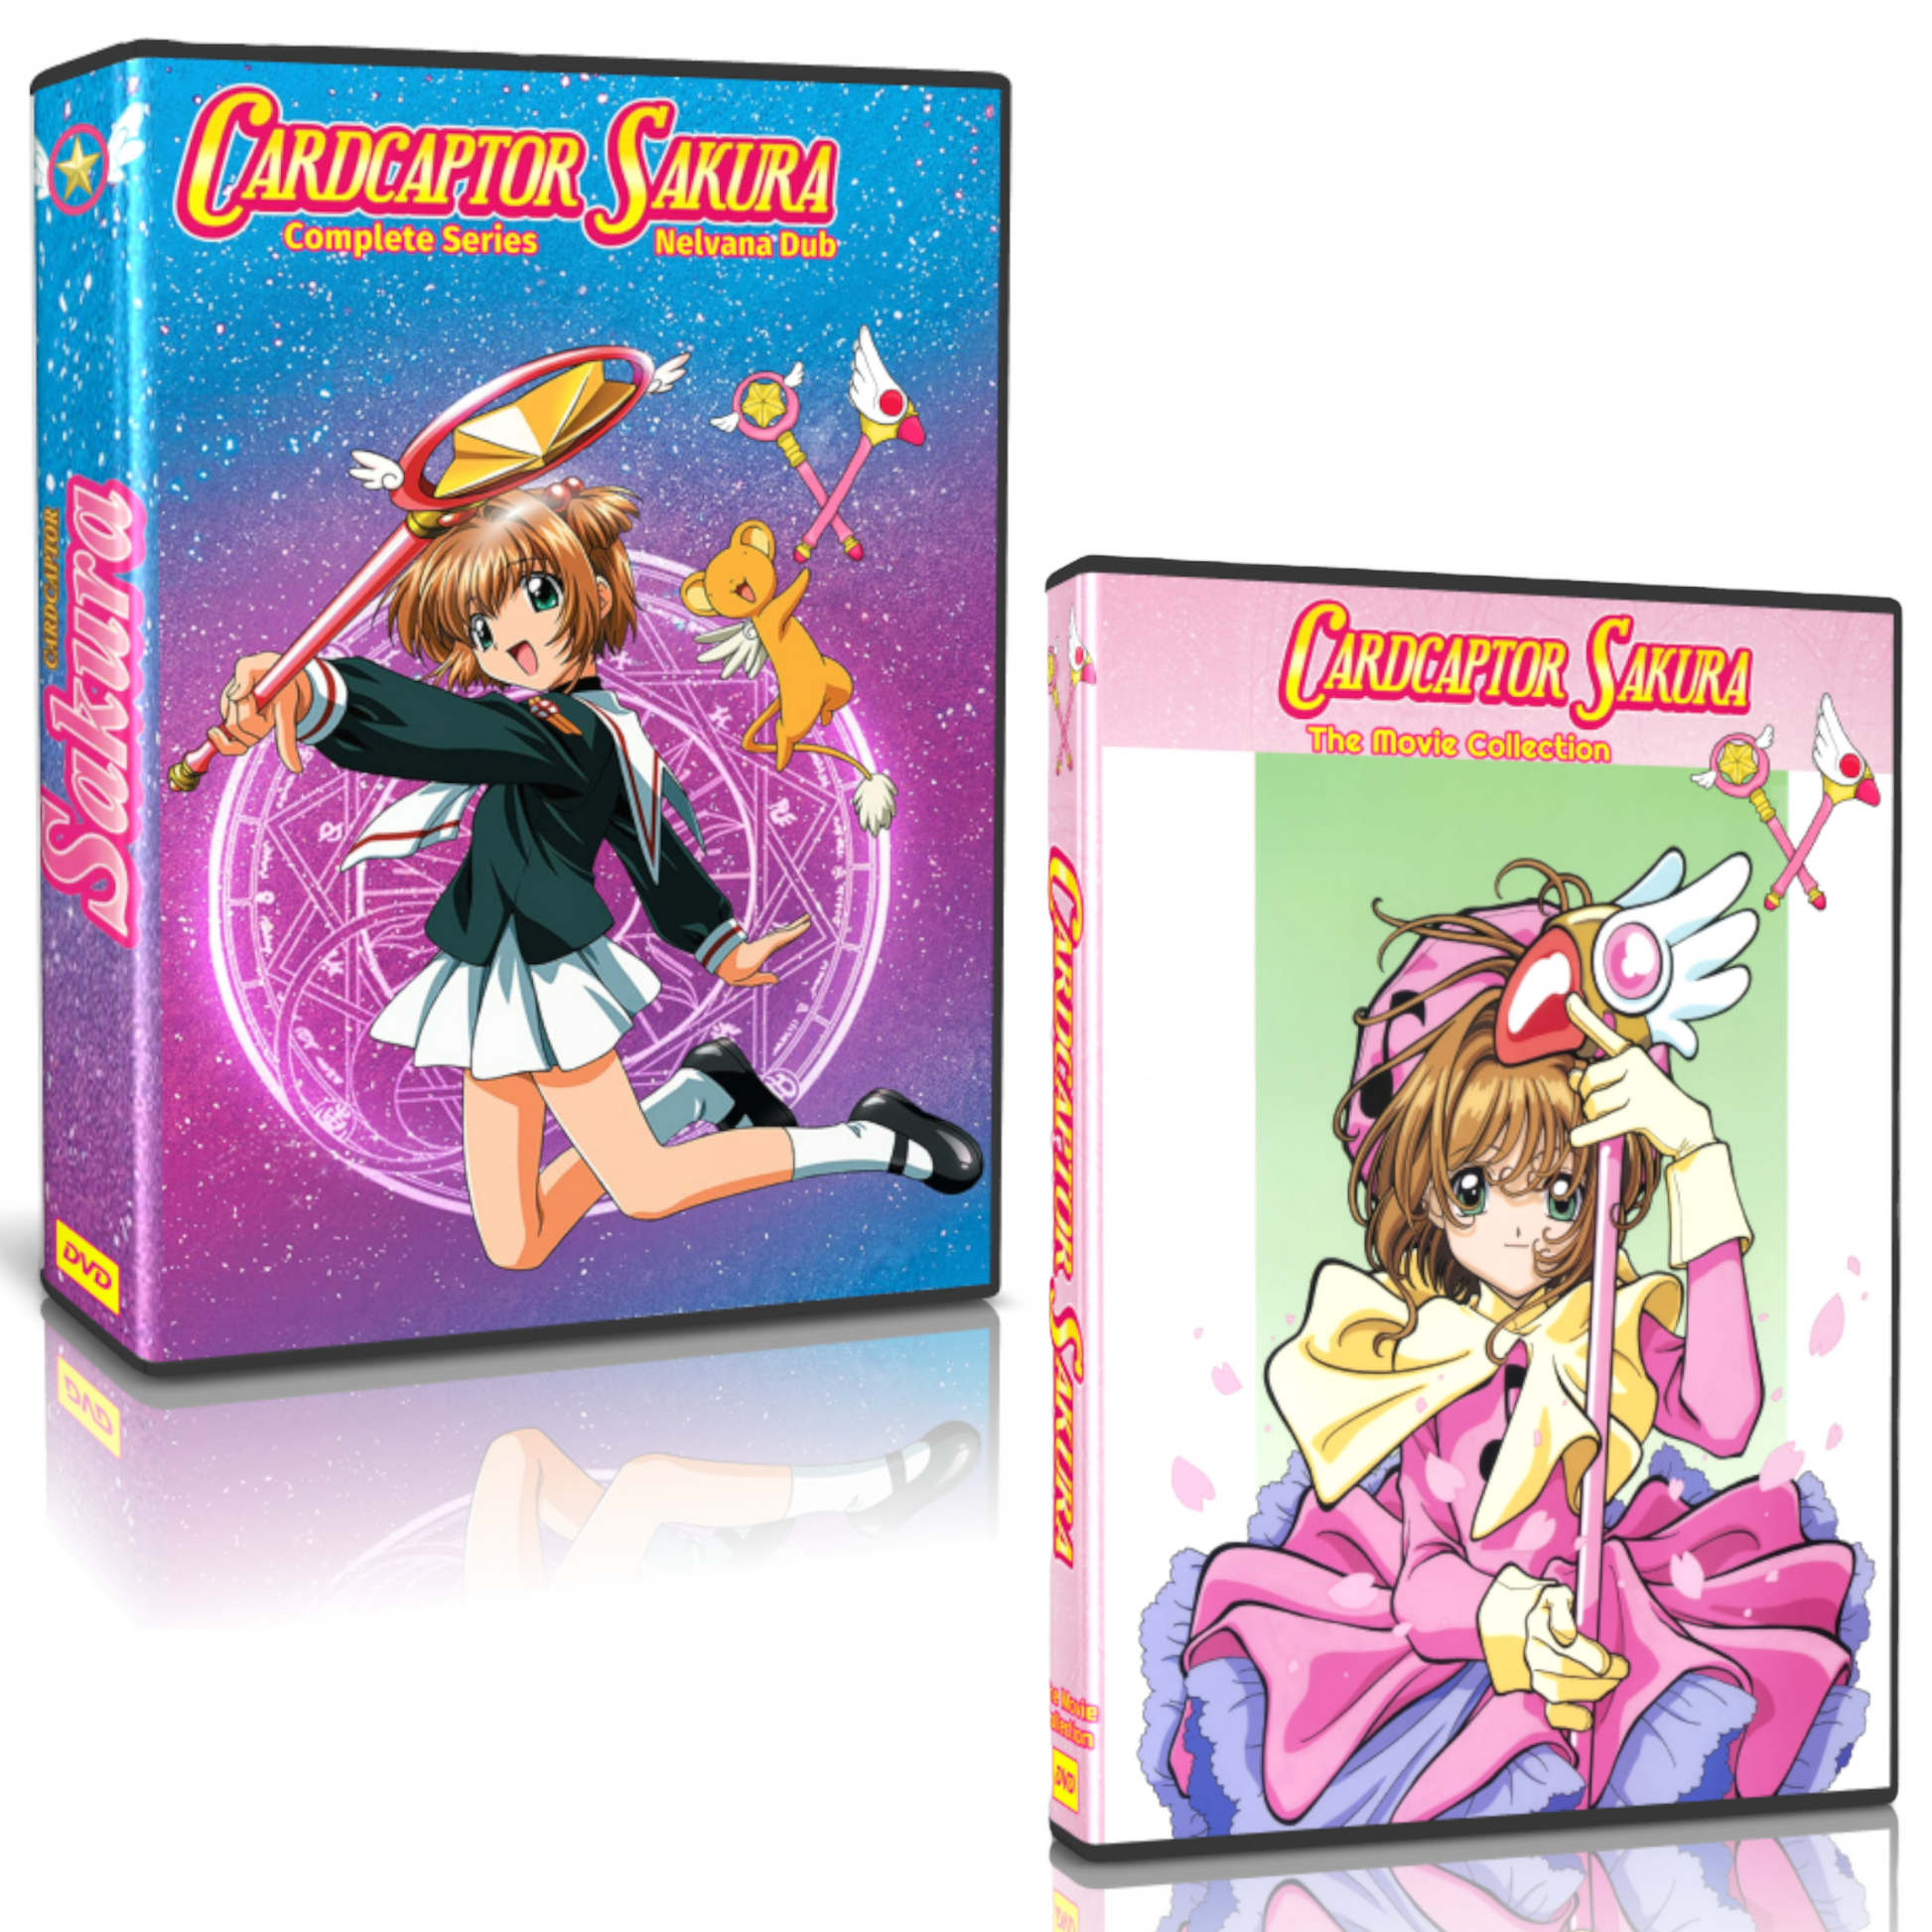 Watch Cardcaptor Sakura Season 4 Episode 2 - Sakura and the